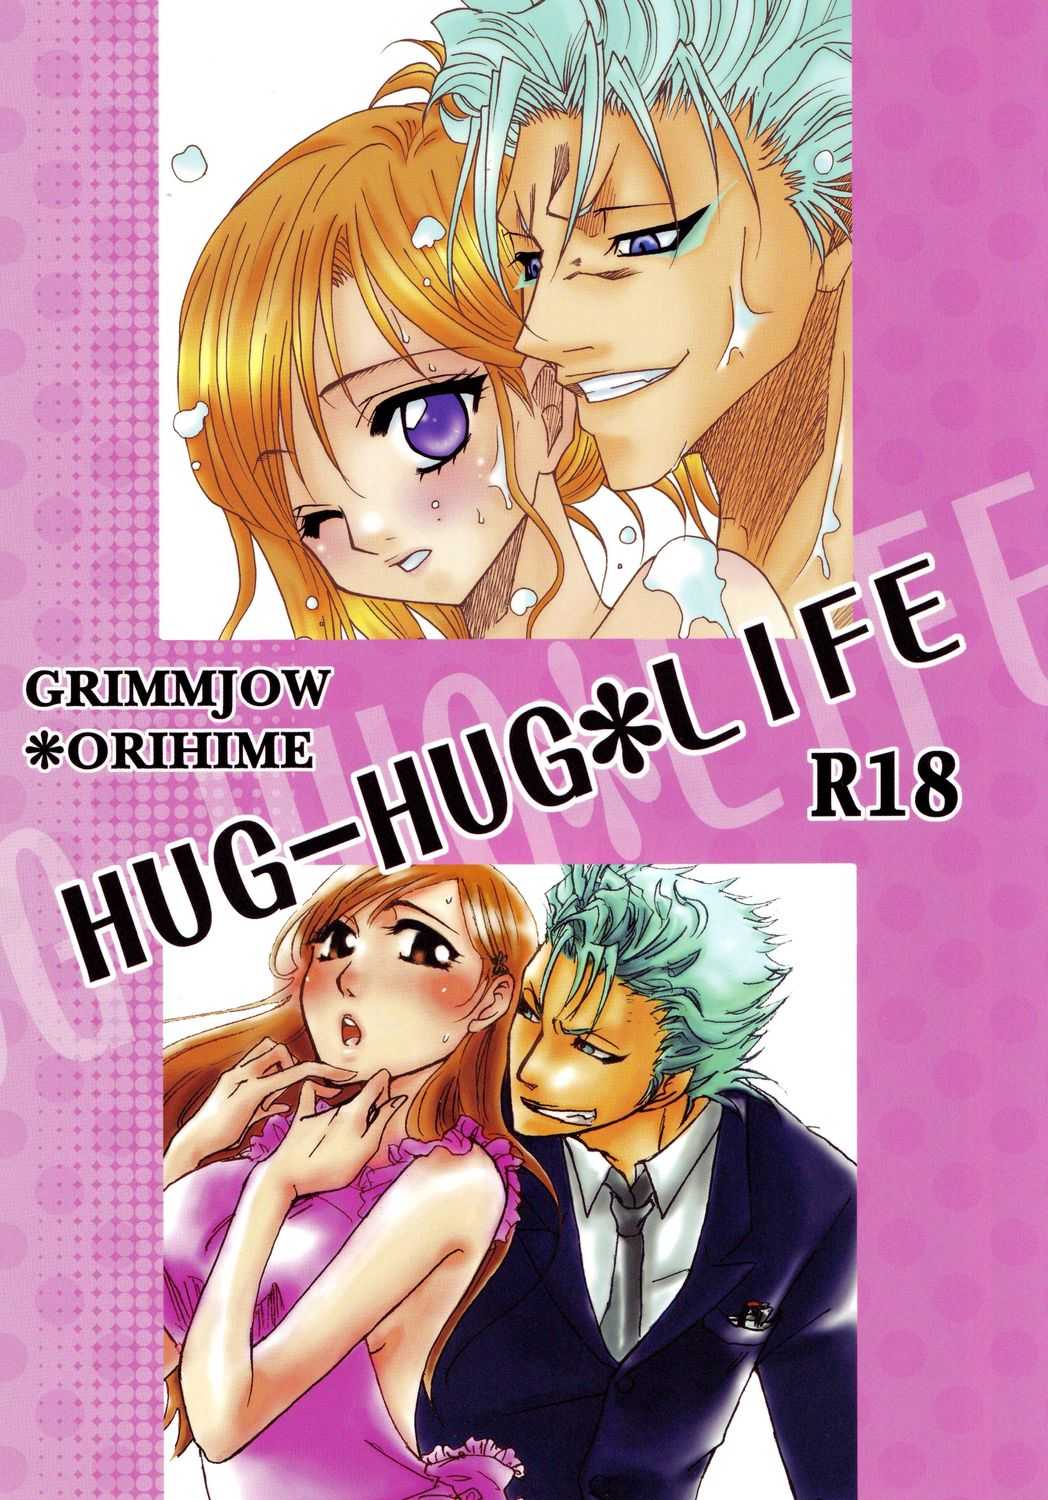 Hug-Hug Life (Bleach) 